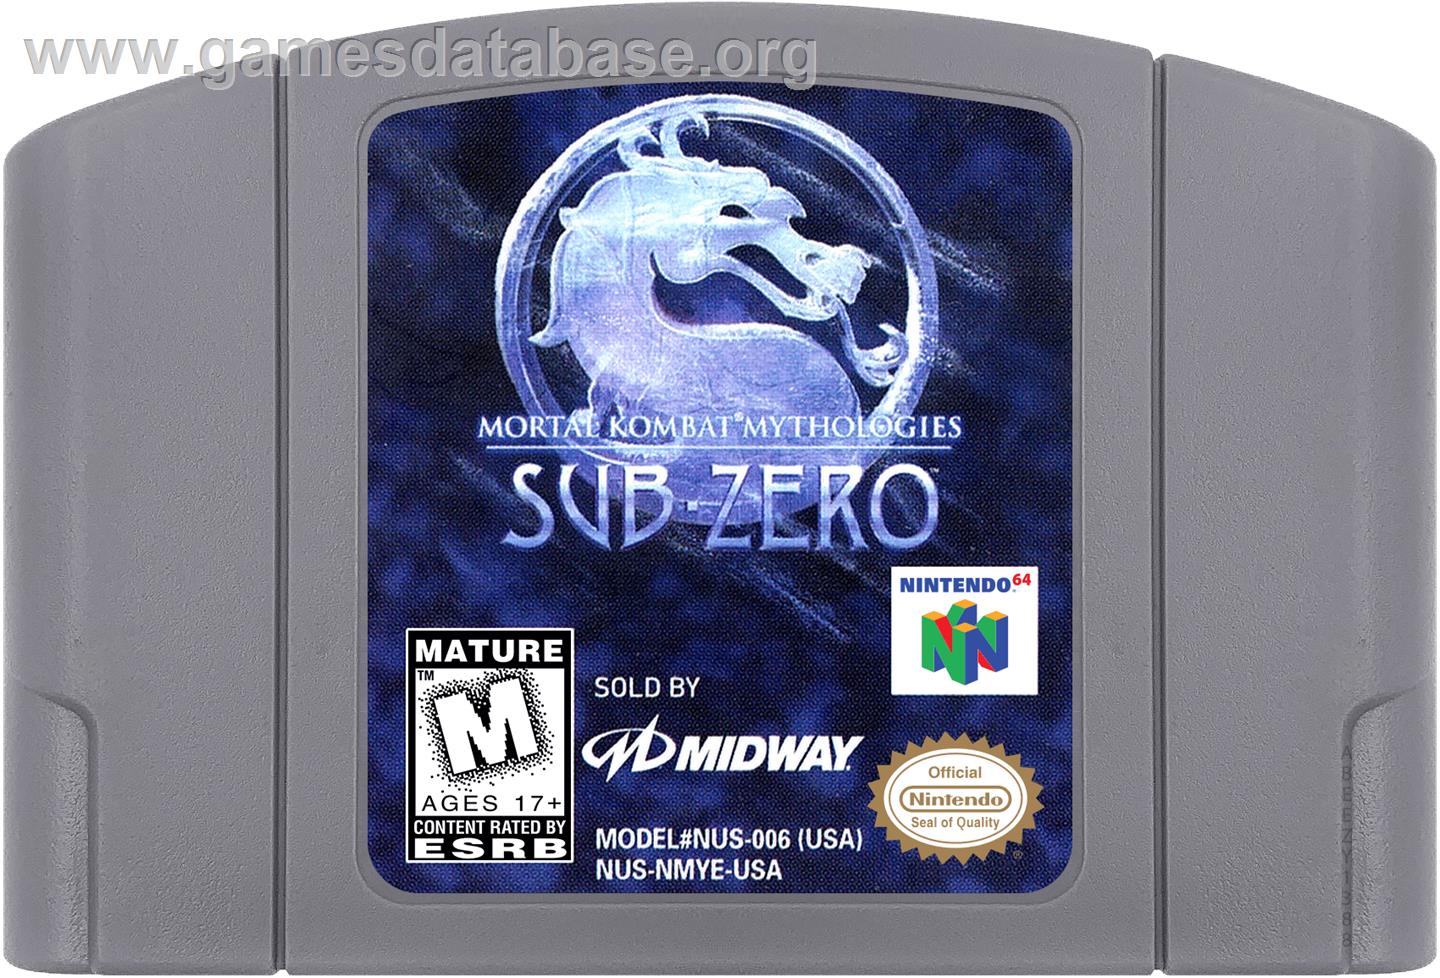 Mortal Kombat Mythologies: Sub-Zero - Nintendo N64 - Artwork 